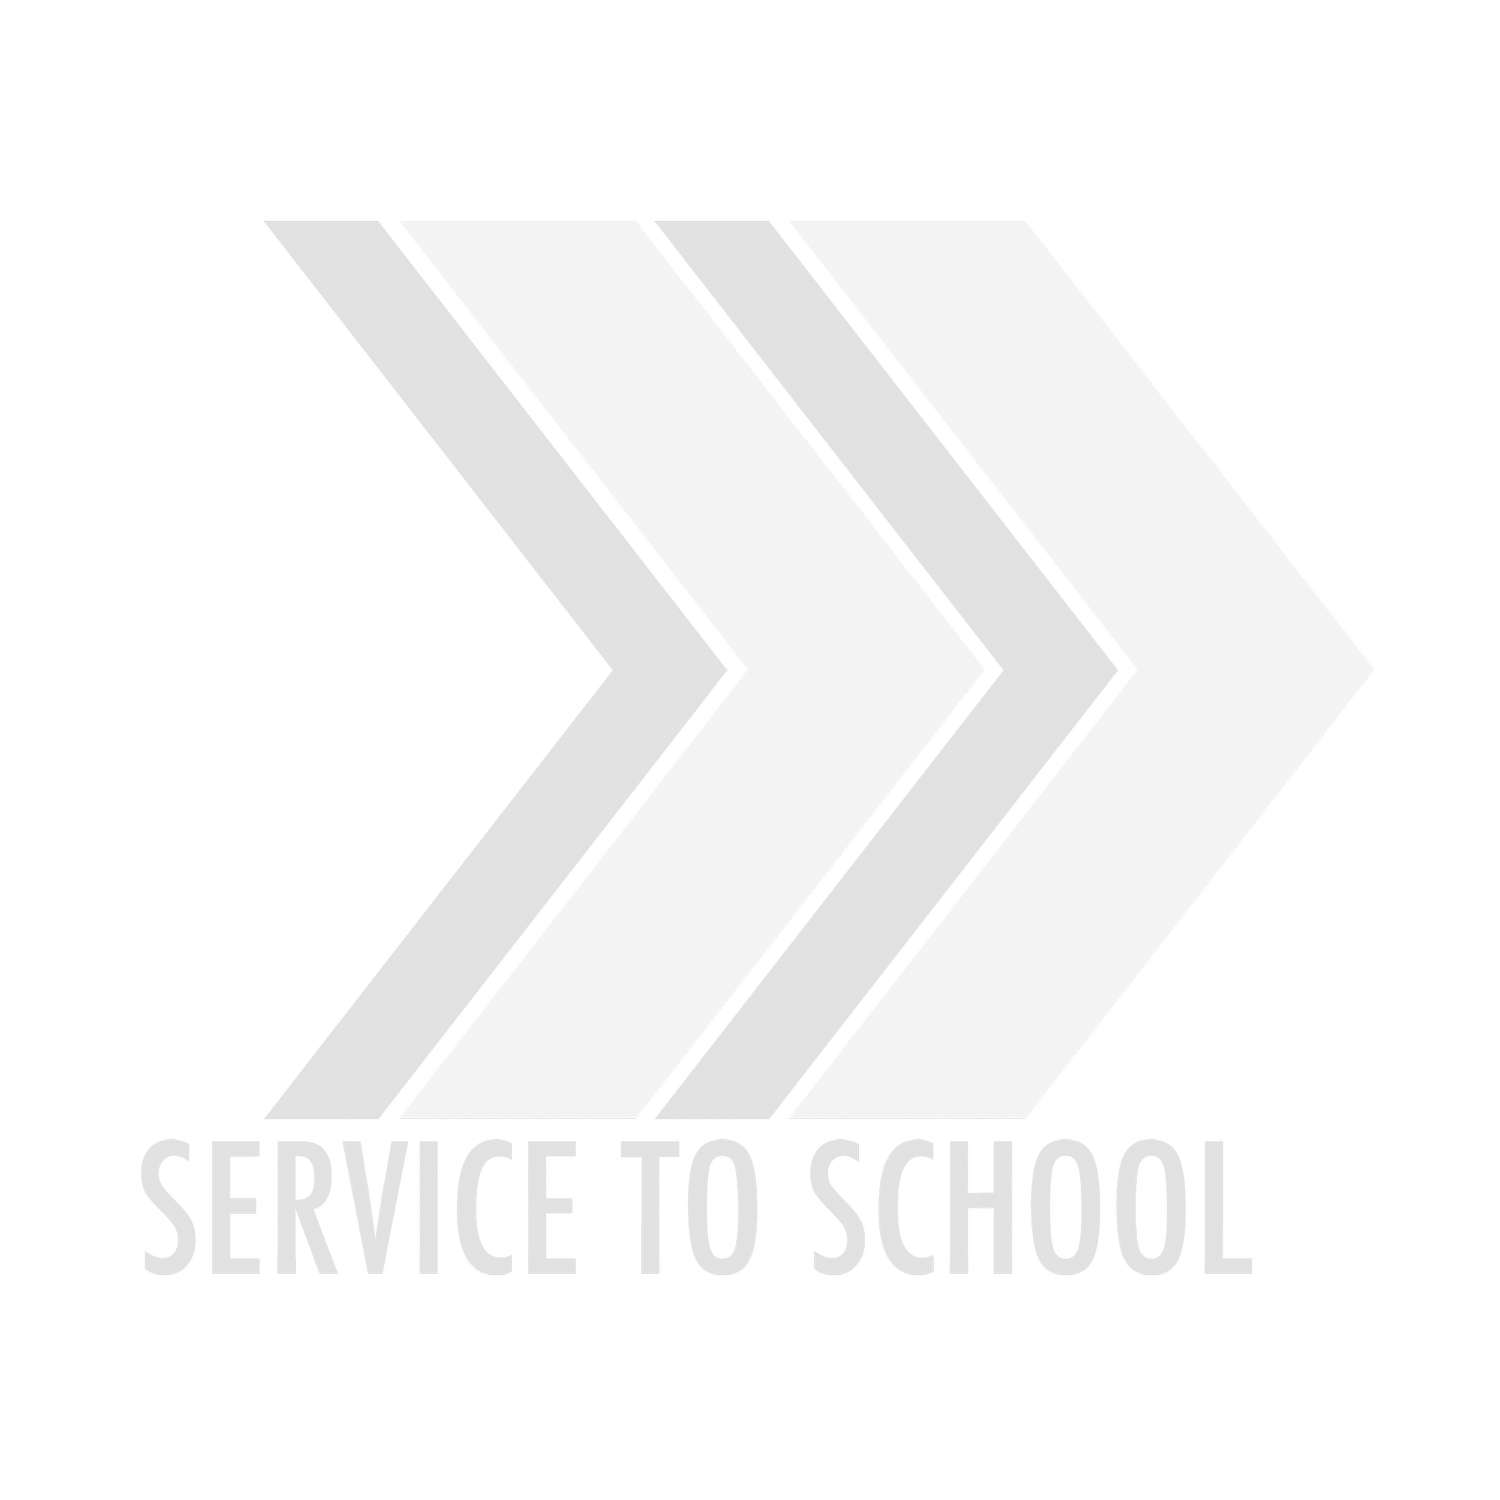 Service to School